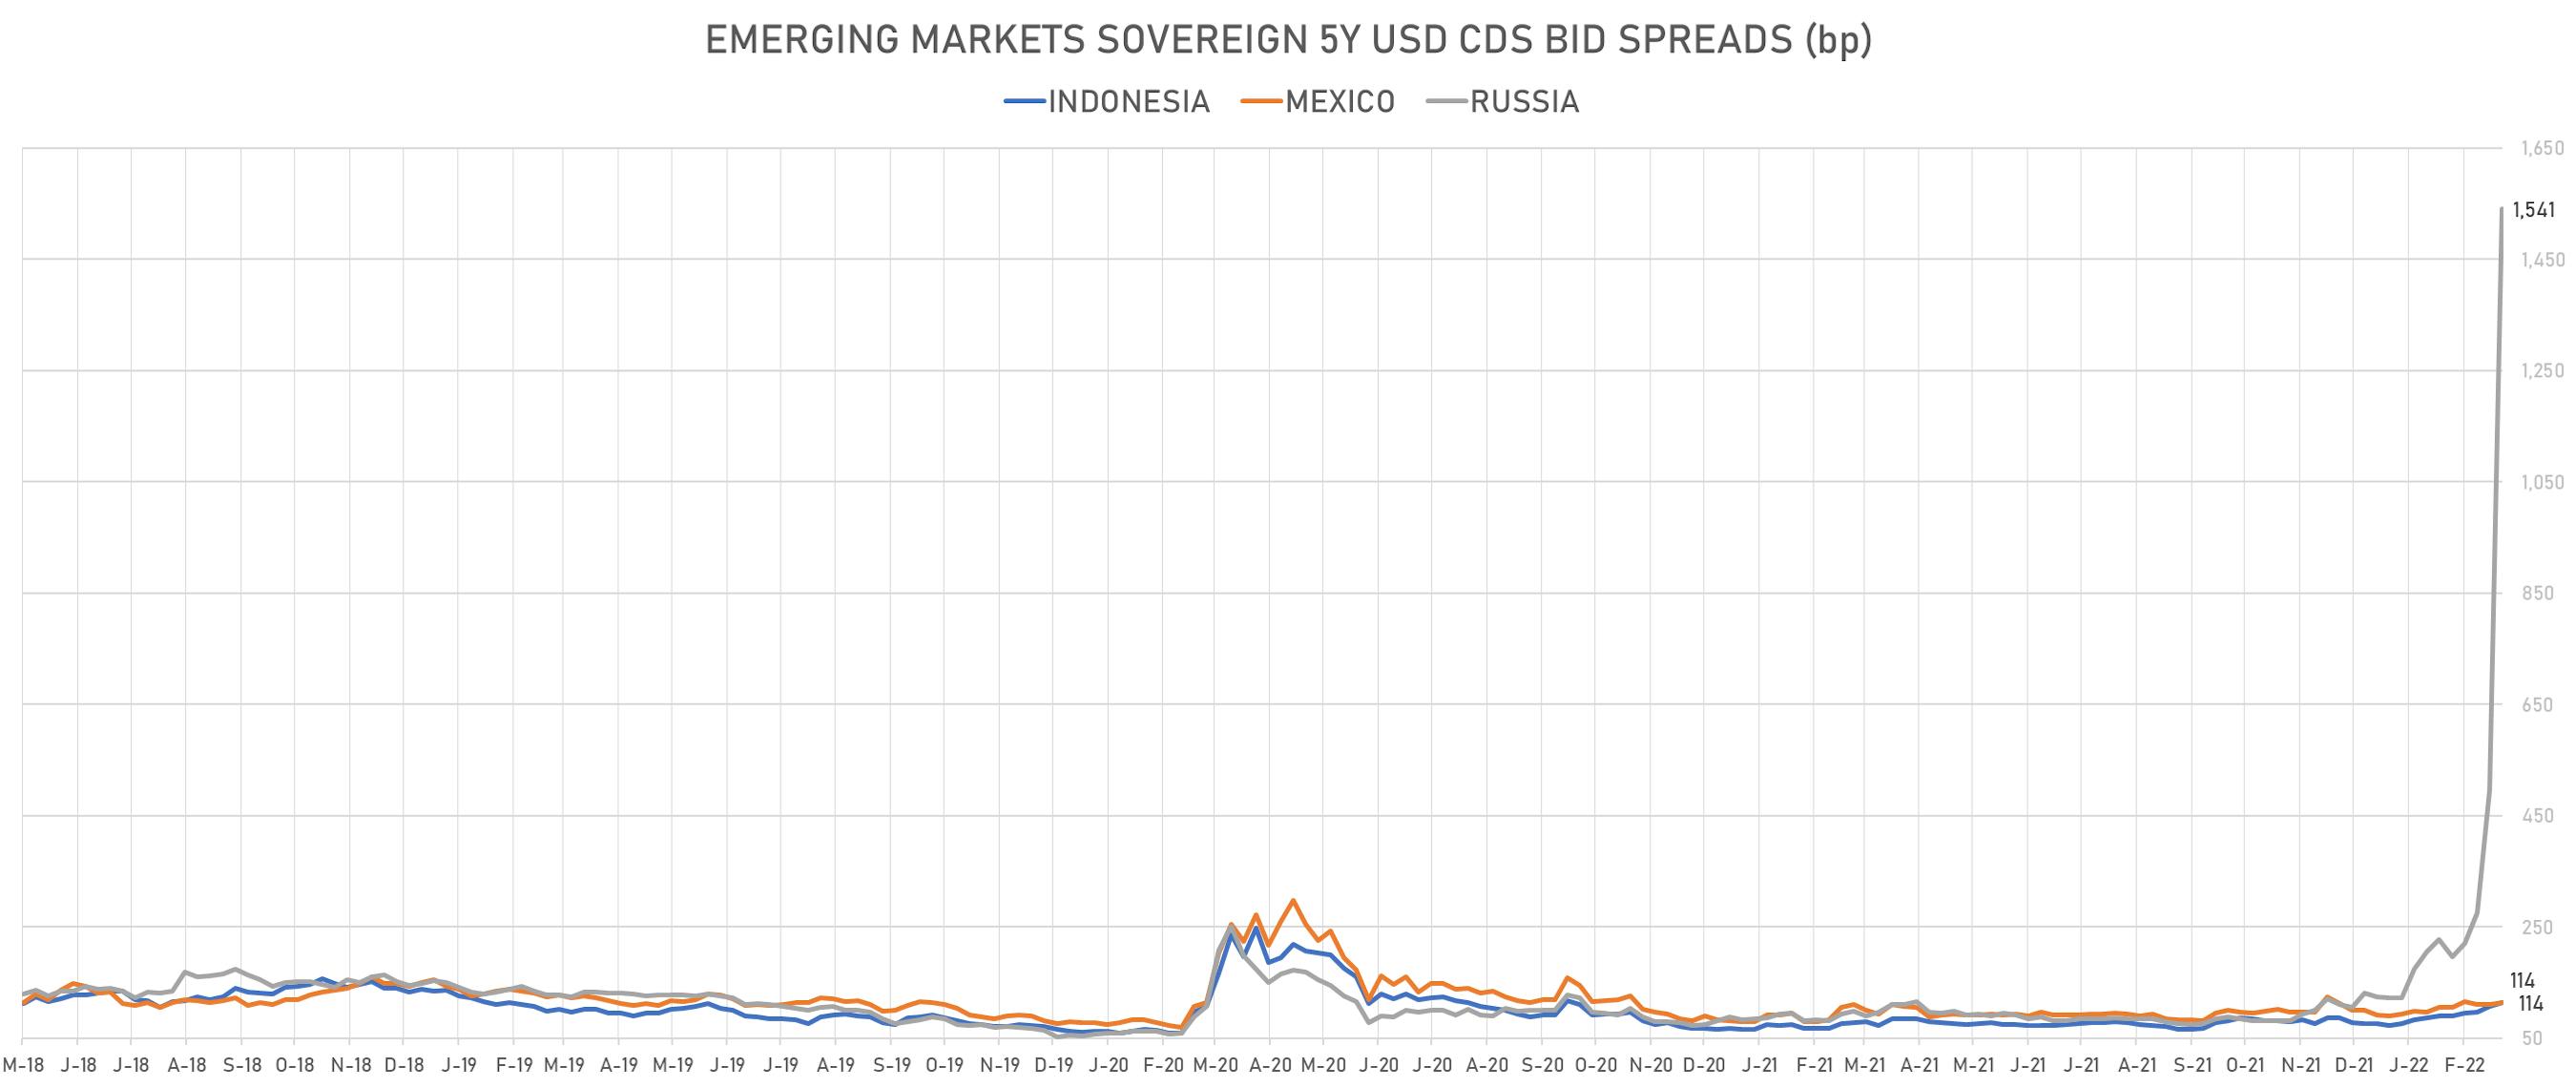 5Y USD CDS Bid Spreads | Sources: phipost.com, Refinitiv data